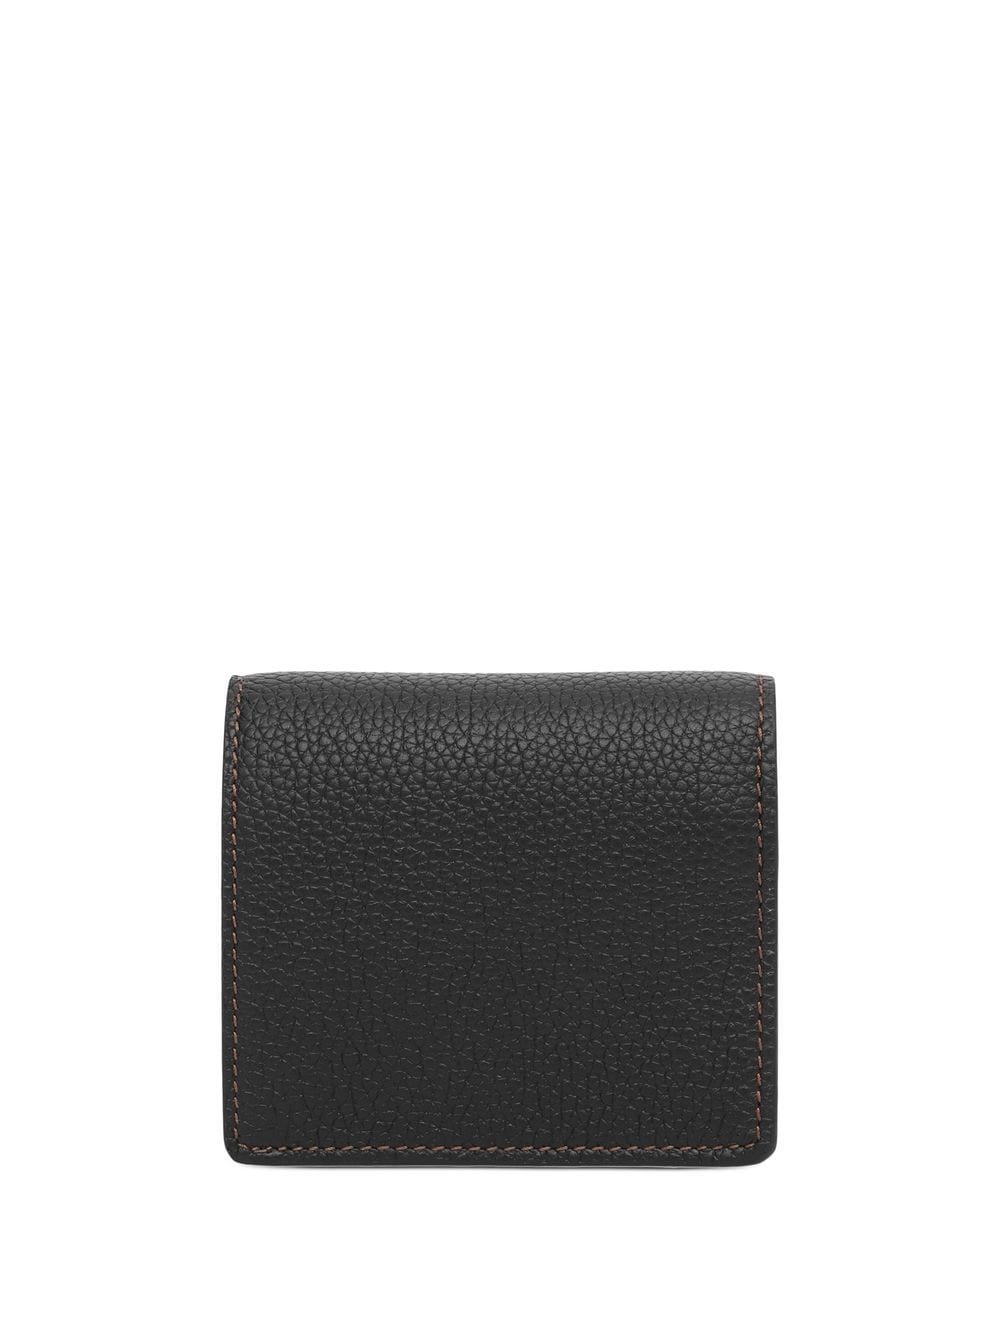 Burberry TB Monogram Grainy Leather Wallet Black